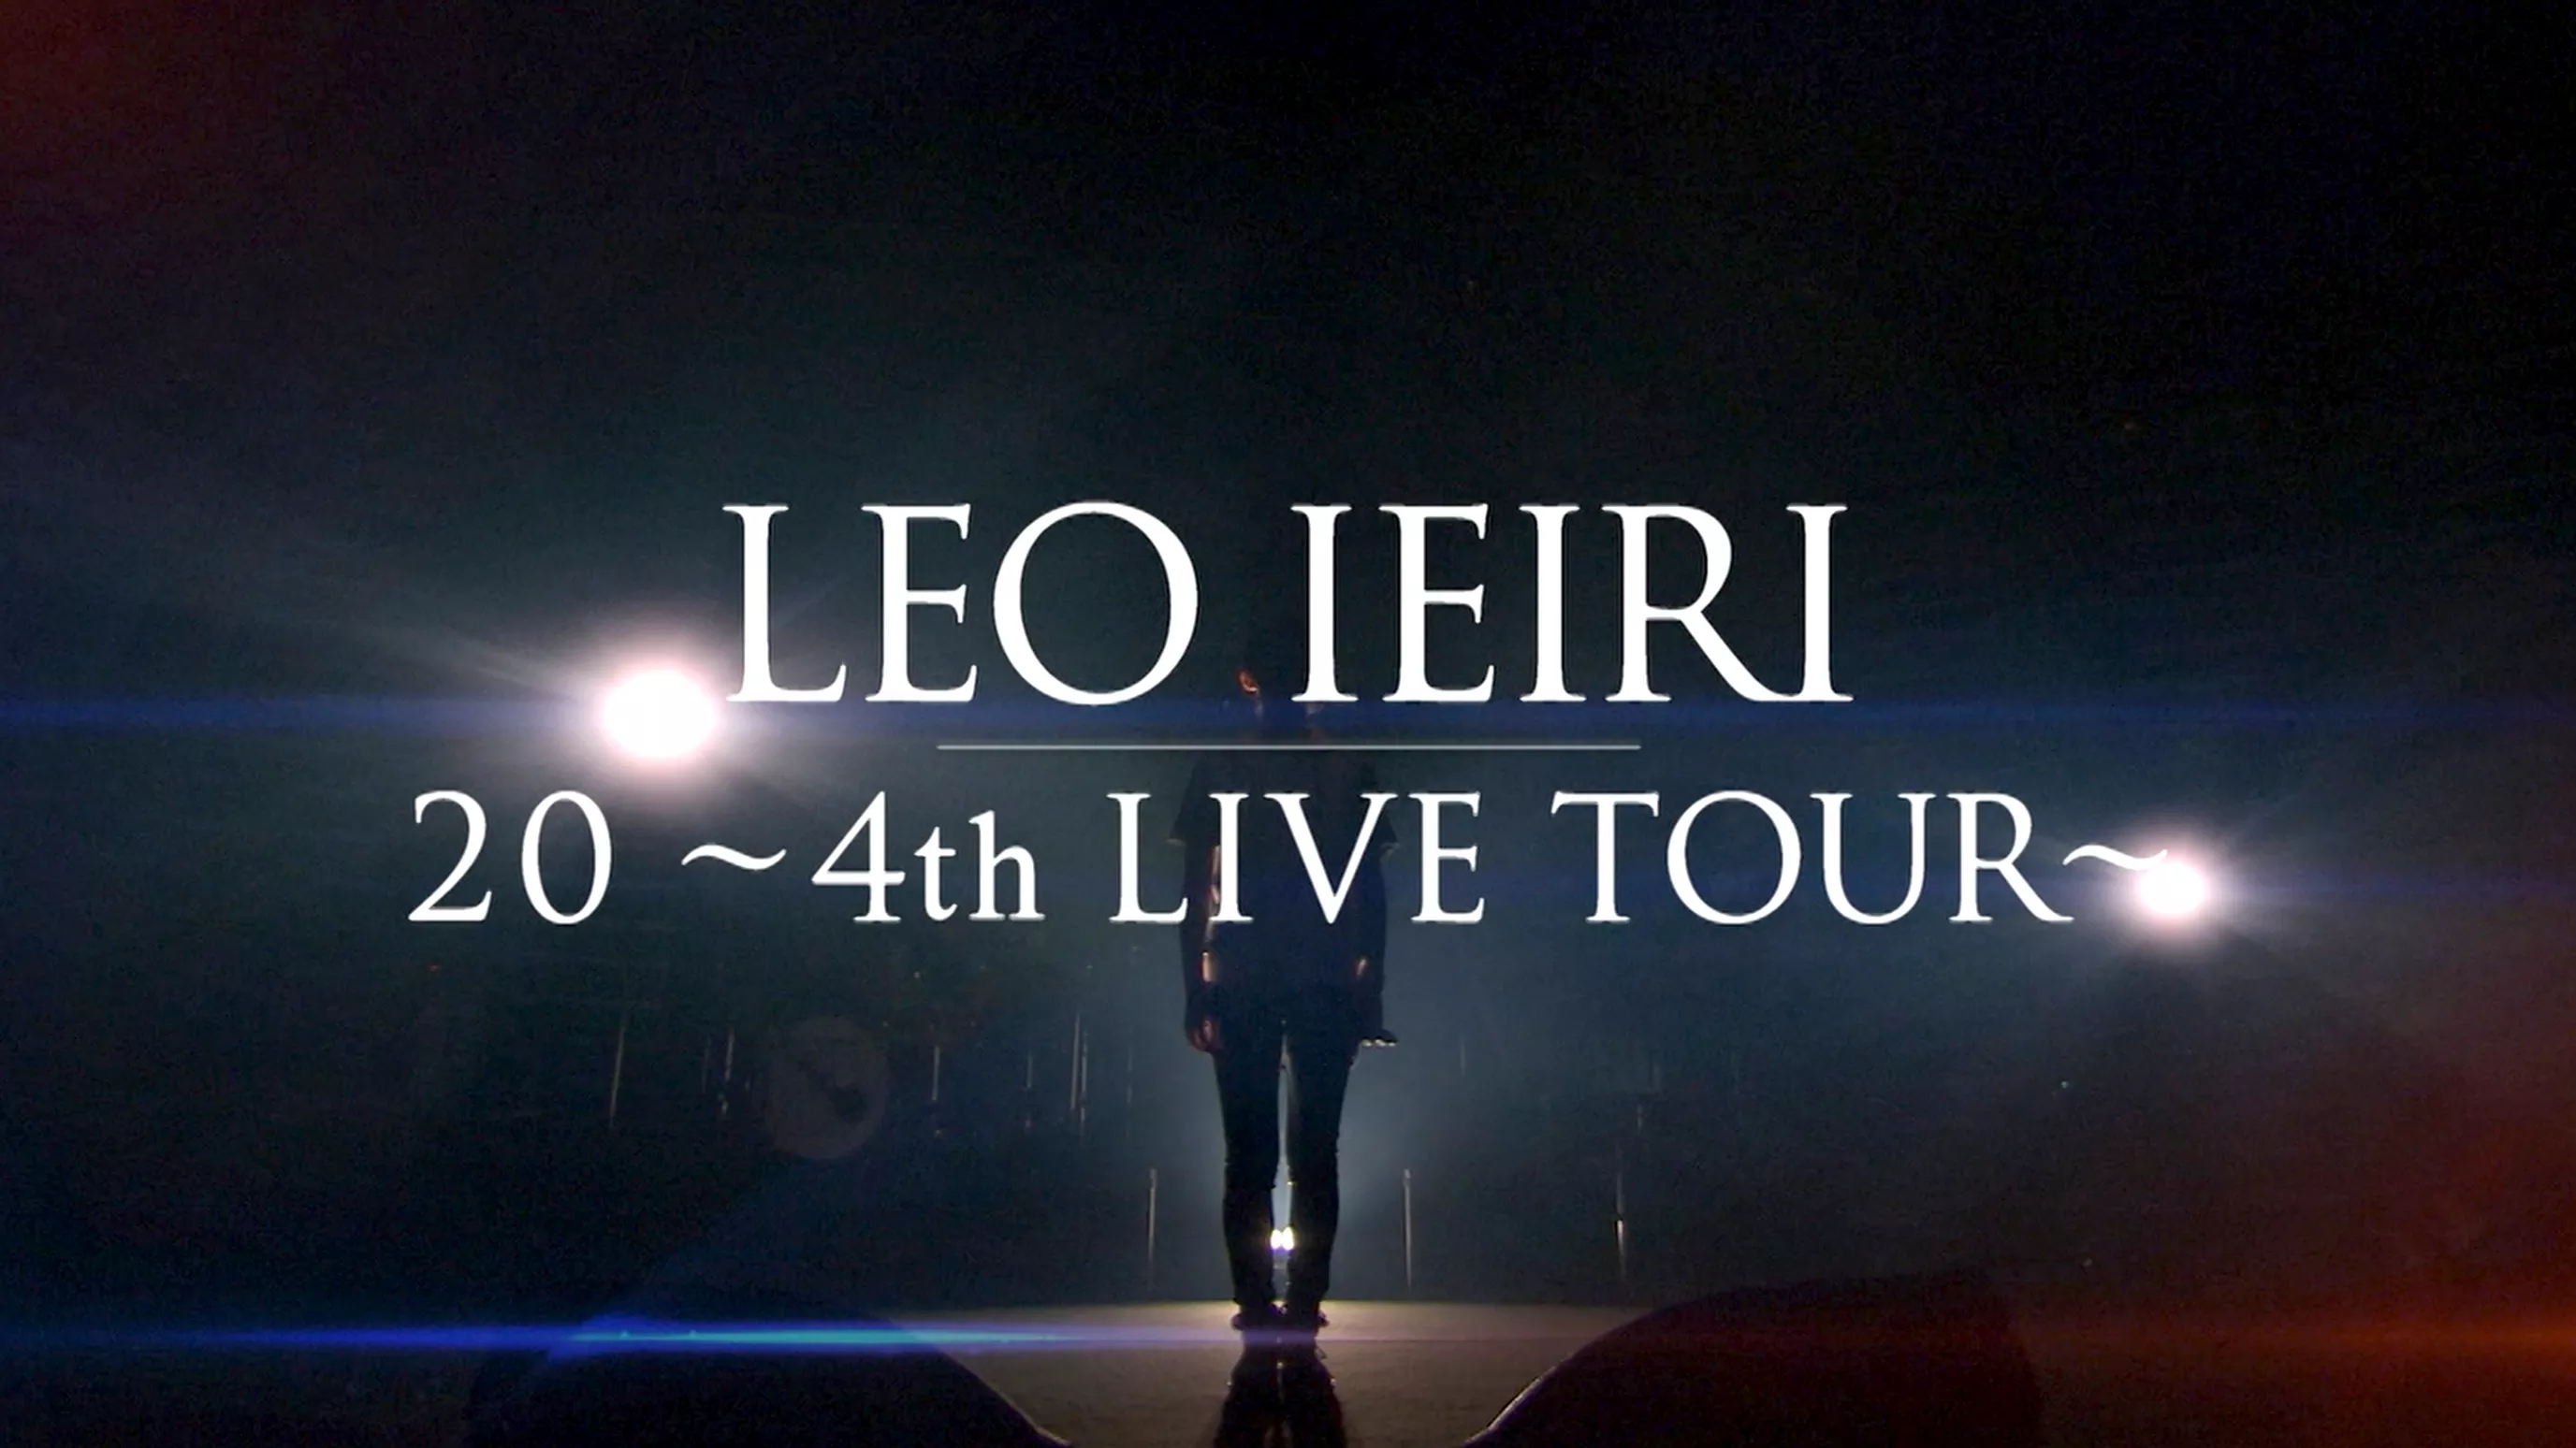 20 ～4th Live Tour～